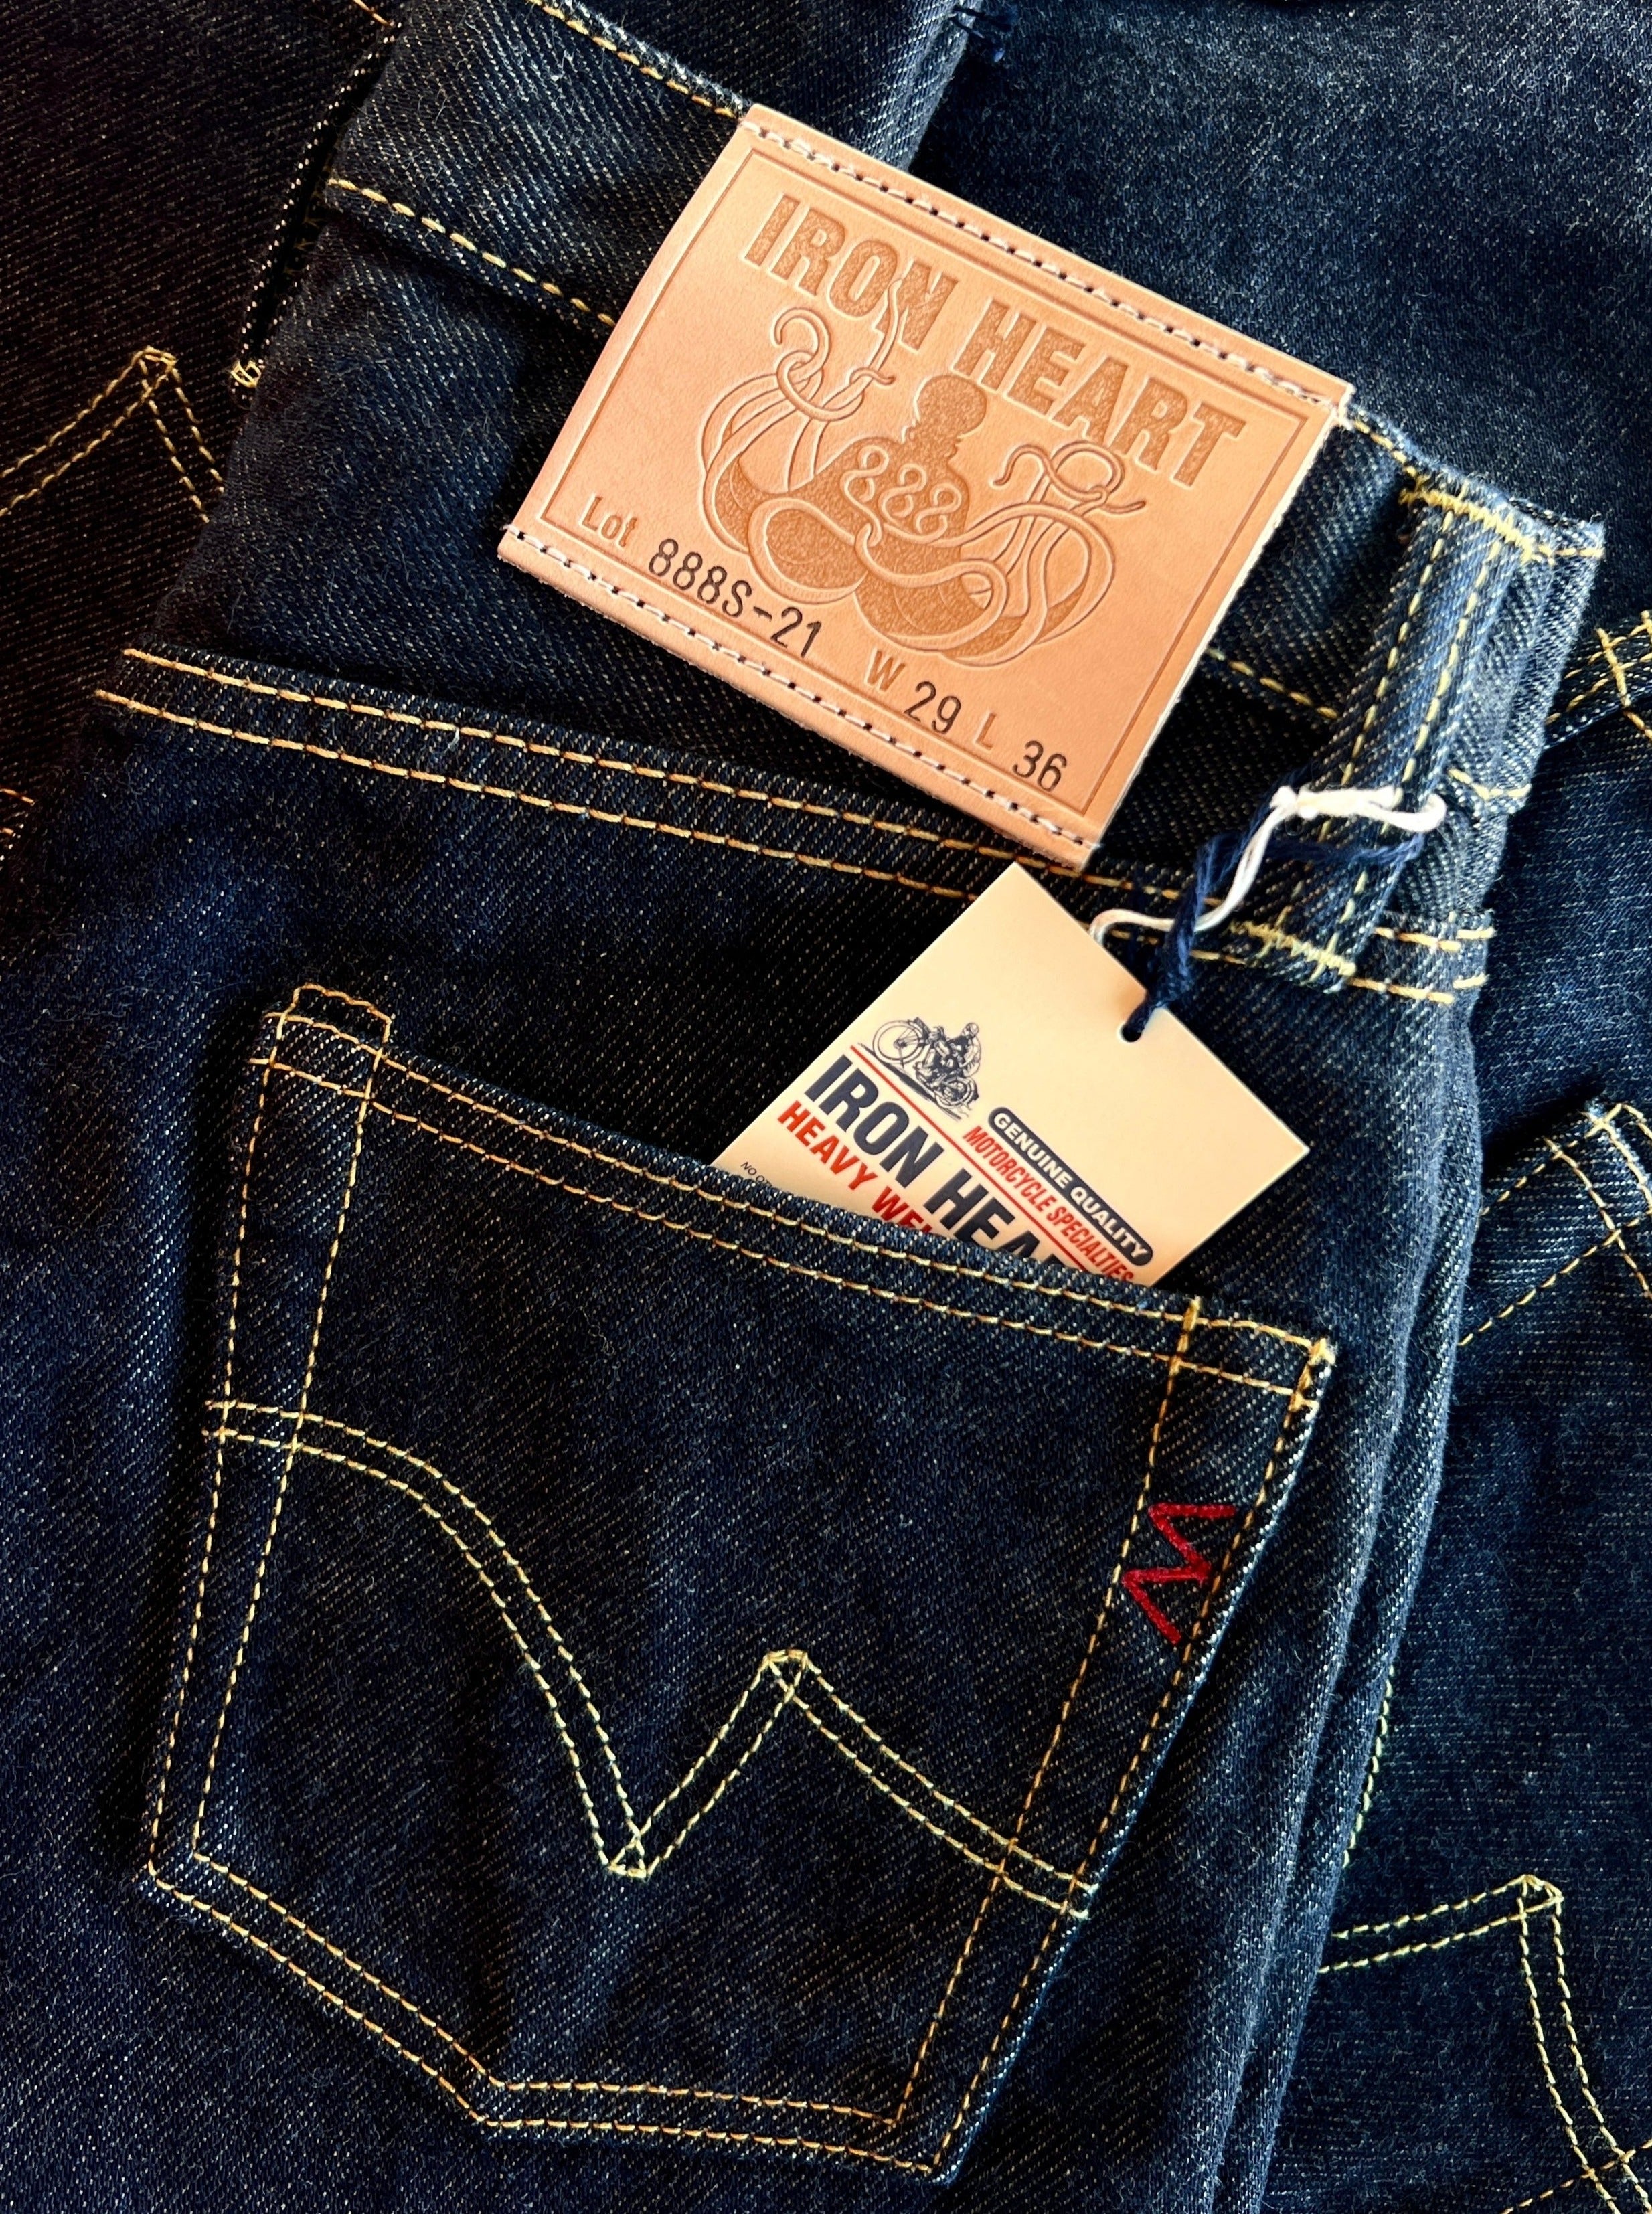 Iron Heart - 21oz 888s High Rise Tapered Cut Jeans Indigo